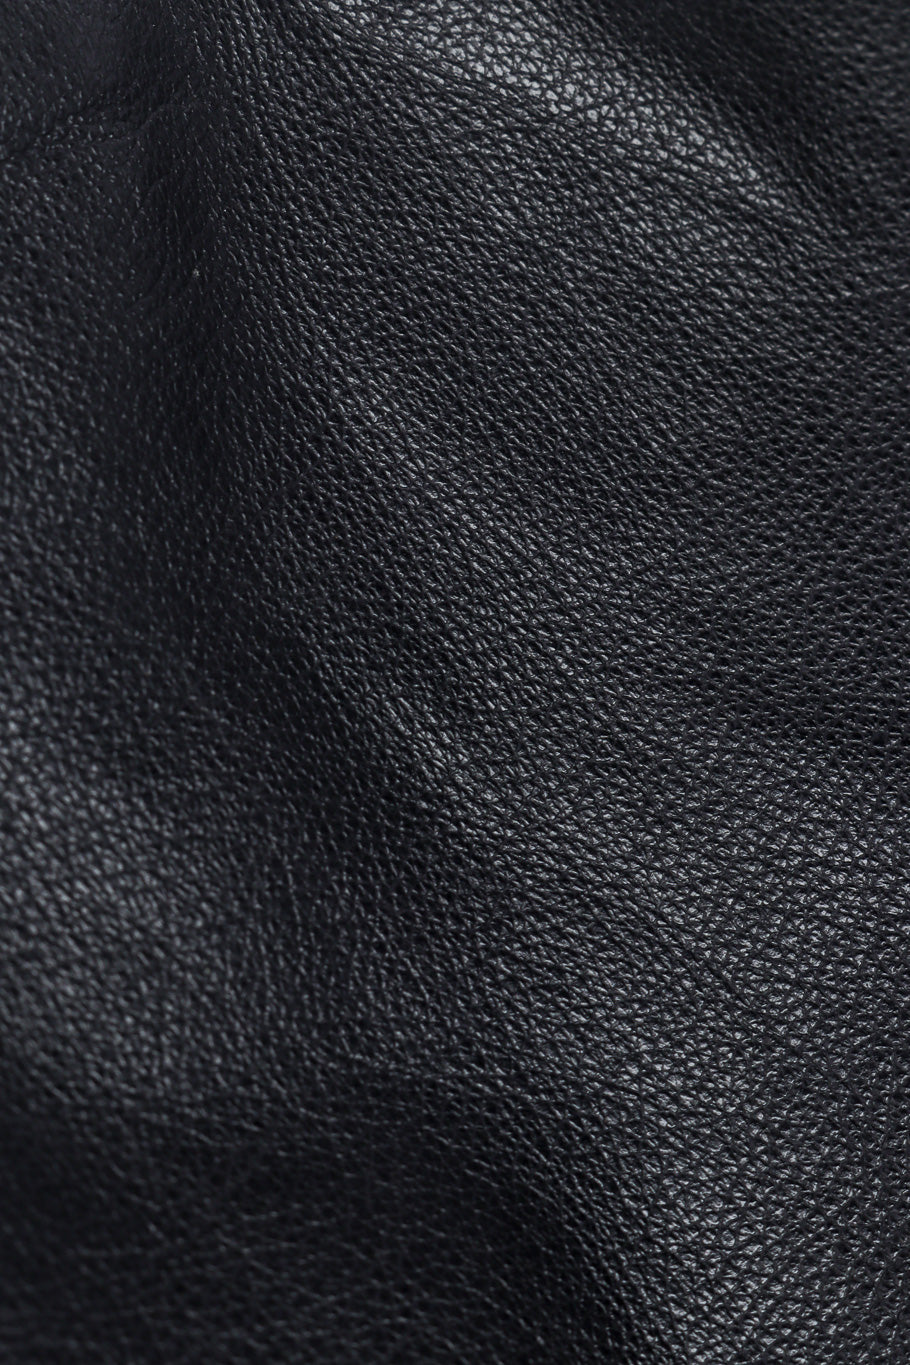 Vintage Stormy Leather Zipper Rise Leather Pant leather closeup @recessla